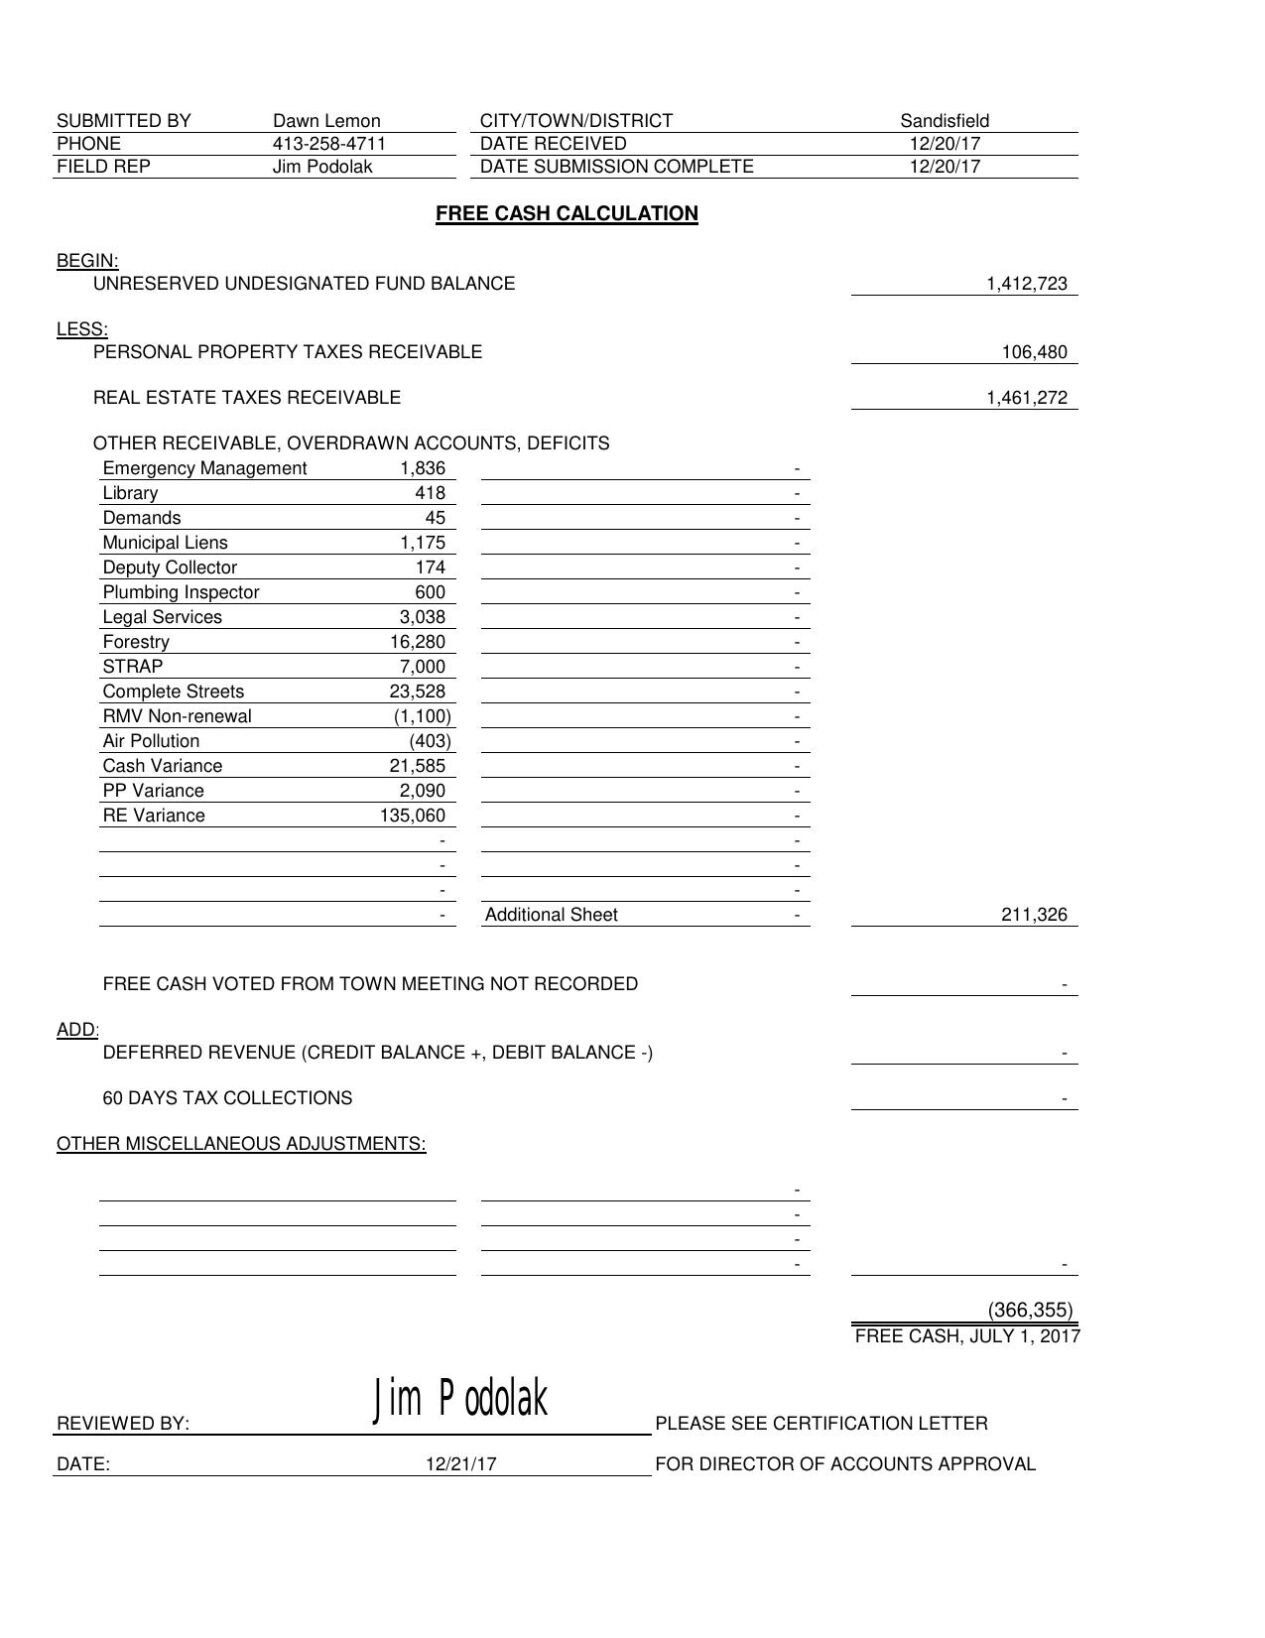 Sandisfield free cash calculation form 2018